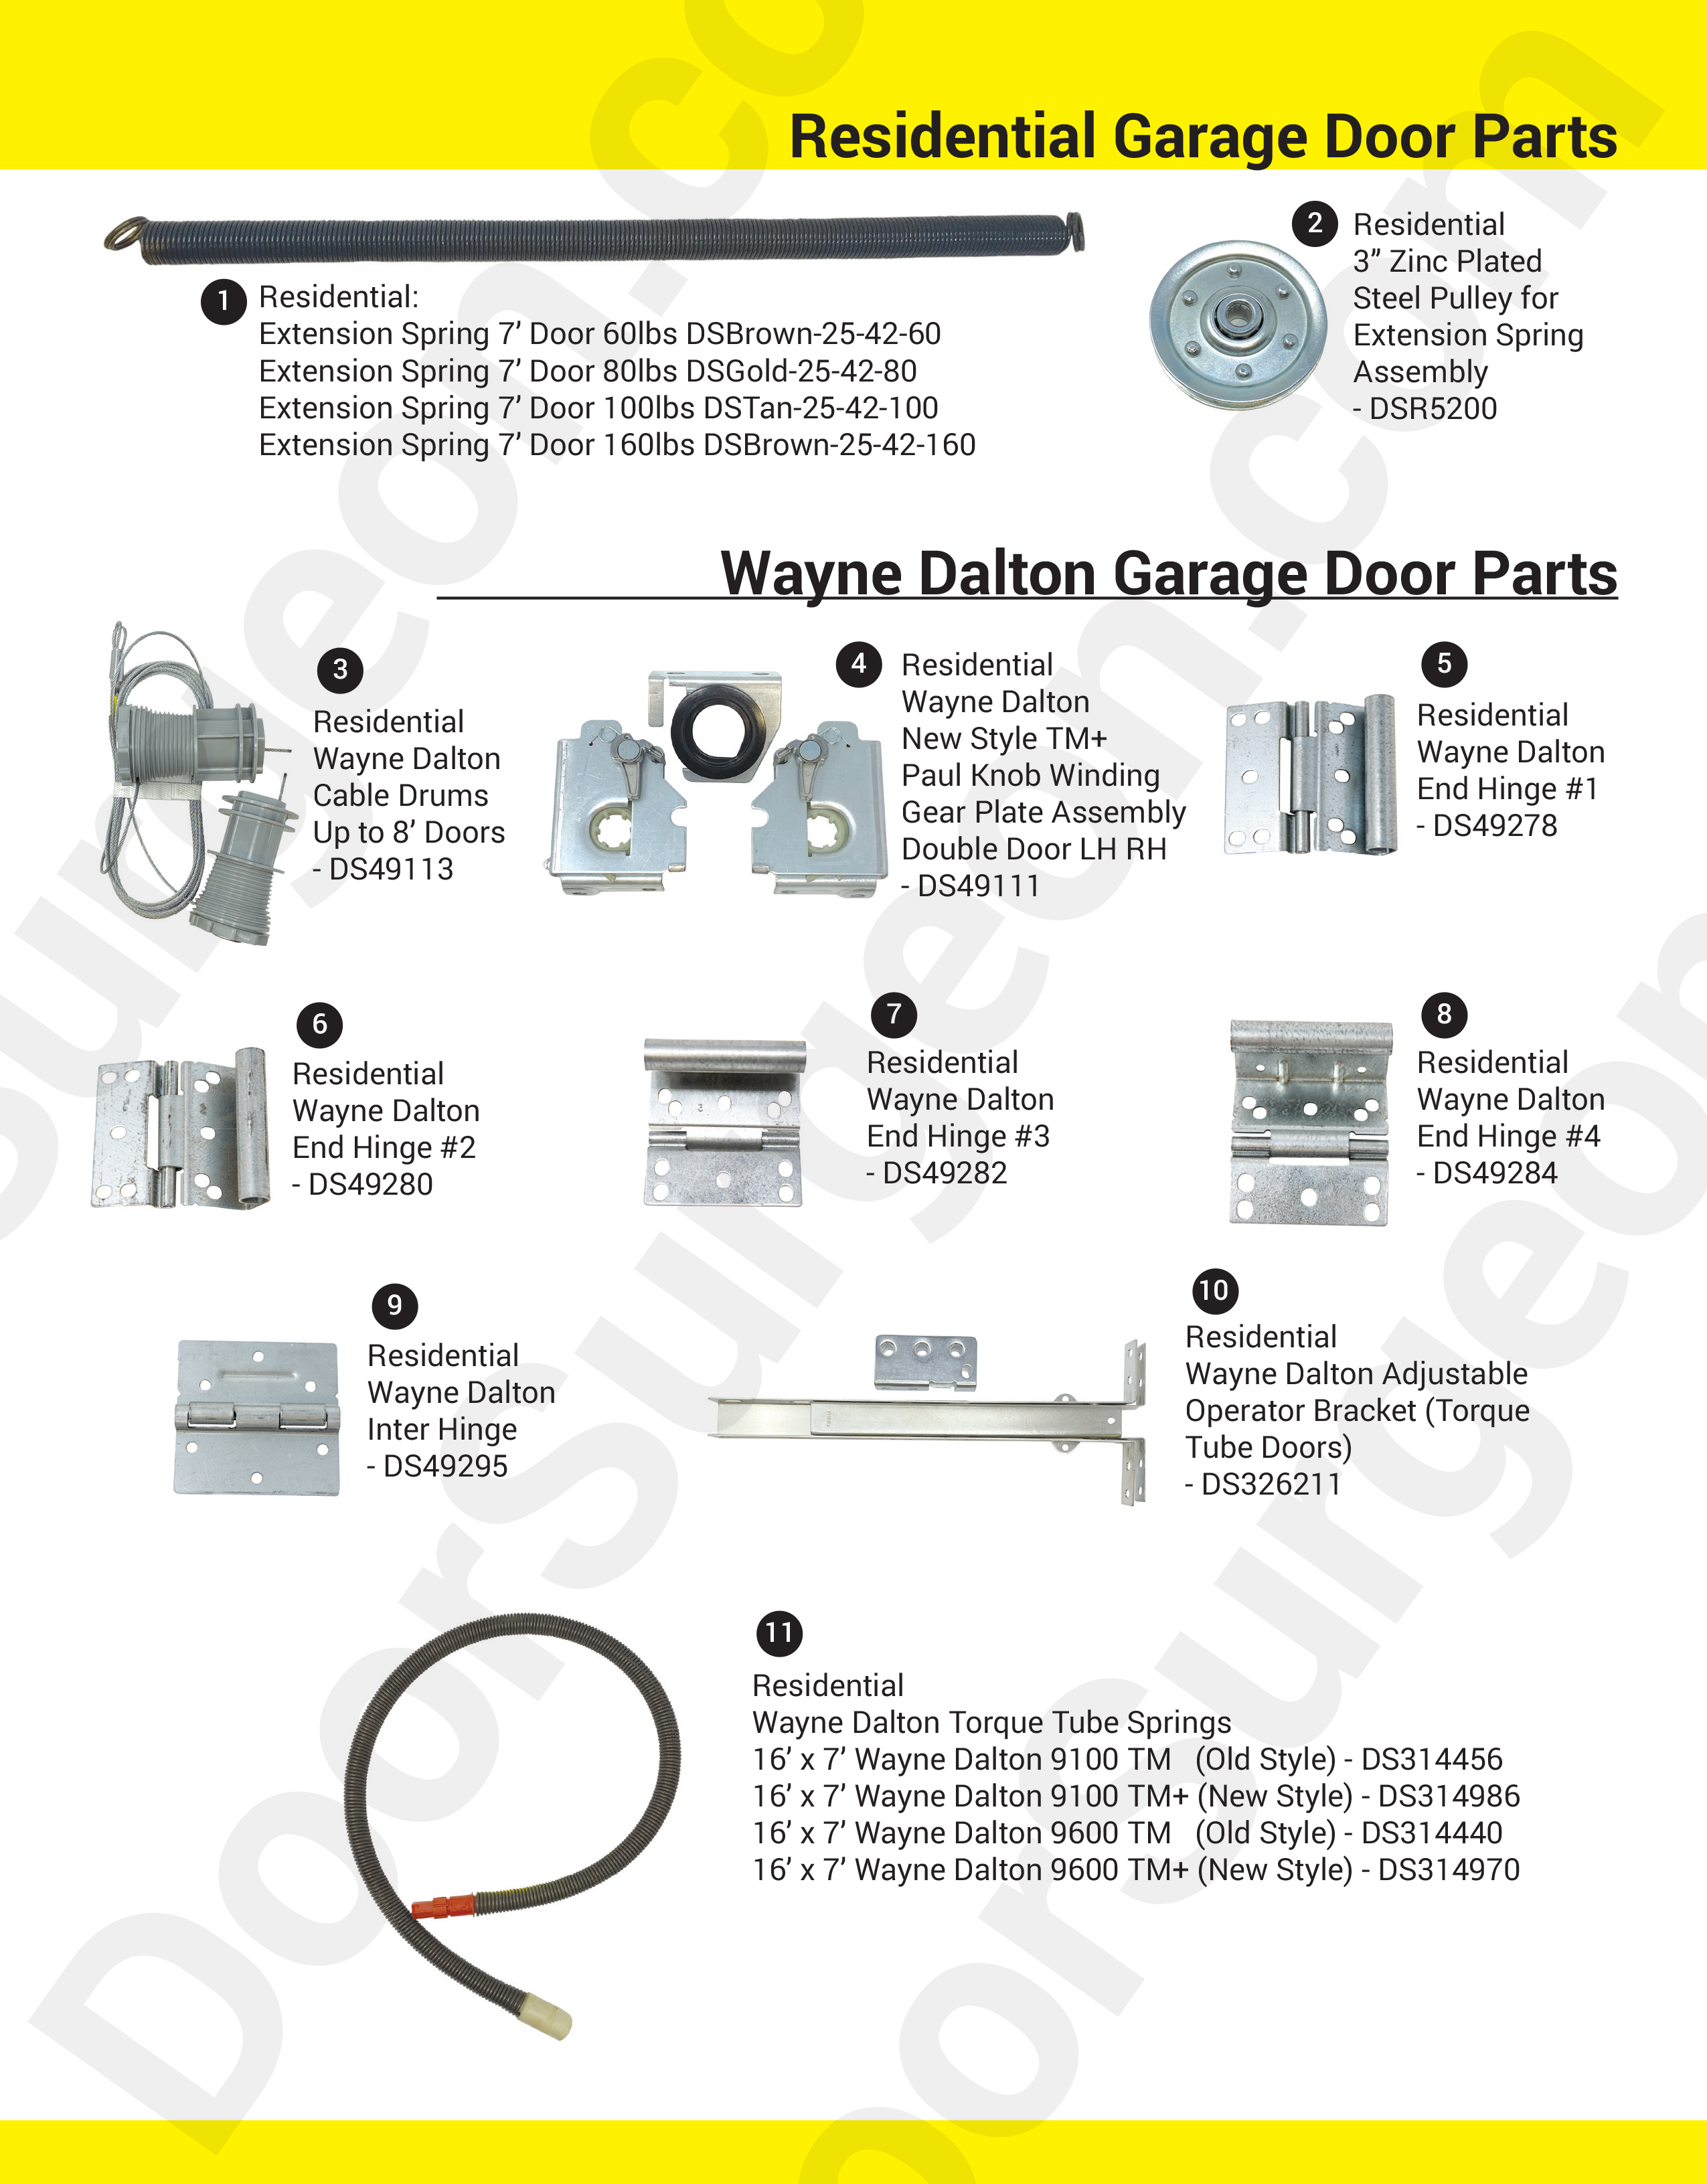 Door Surgeon provides in-store sales and service of garage door parts as well as mobile door service and installation.